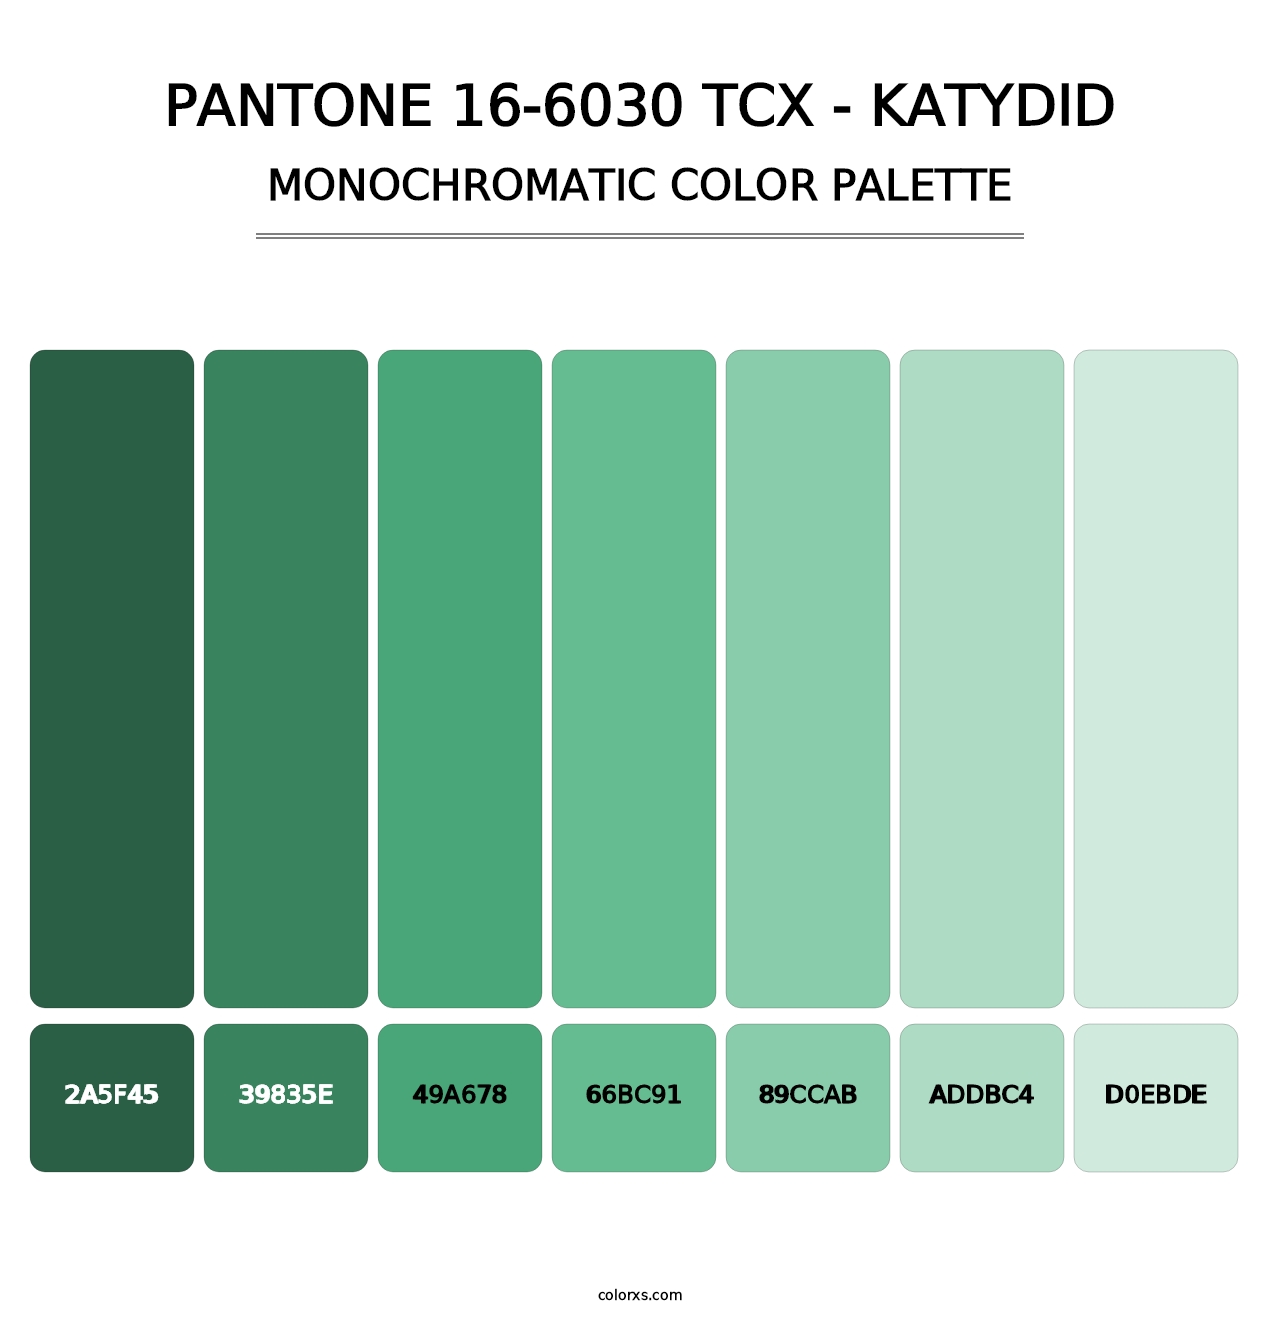 PANTONE 16-6030 TCX - Katydid - Monochromatic Color Palette